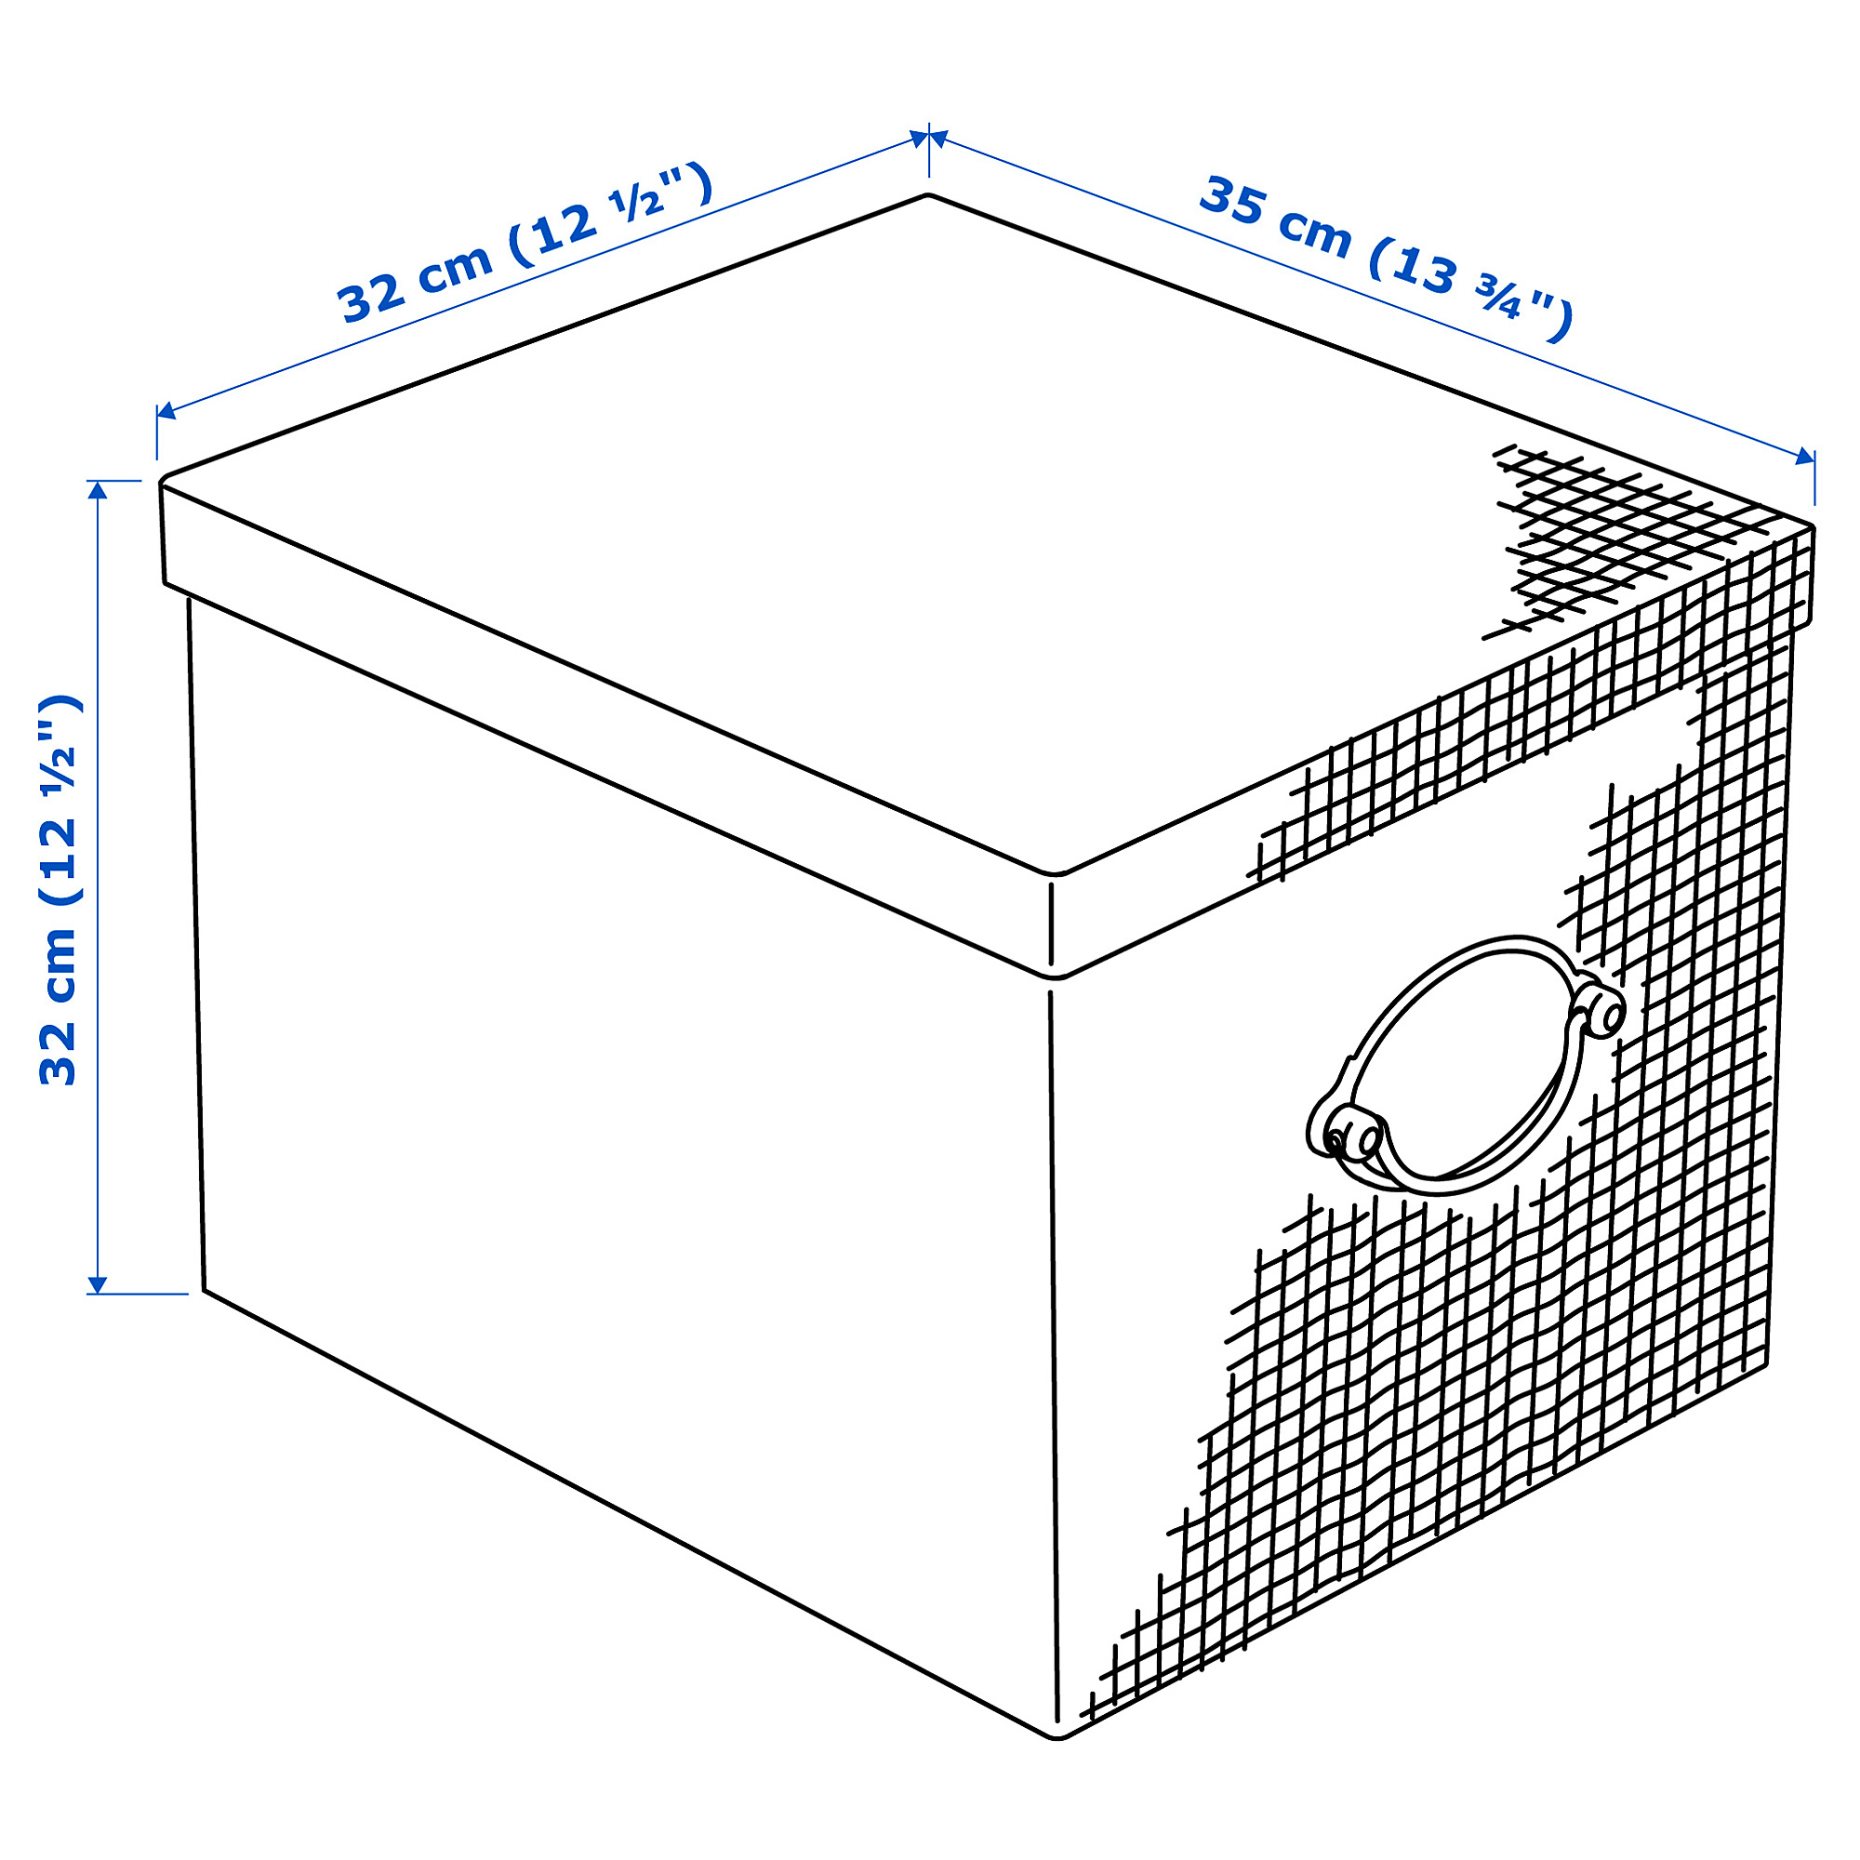 KVARNVIK, κουτί αποθήκευσης με καπάκι, 32x35x32 cm, 104.669.51